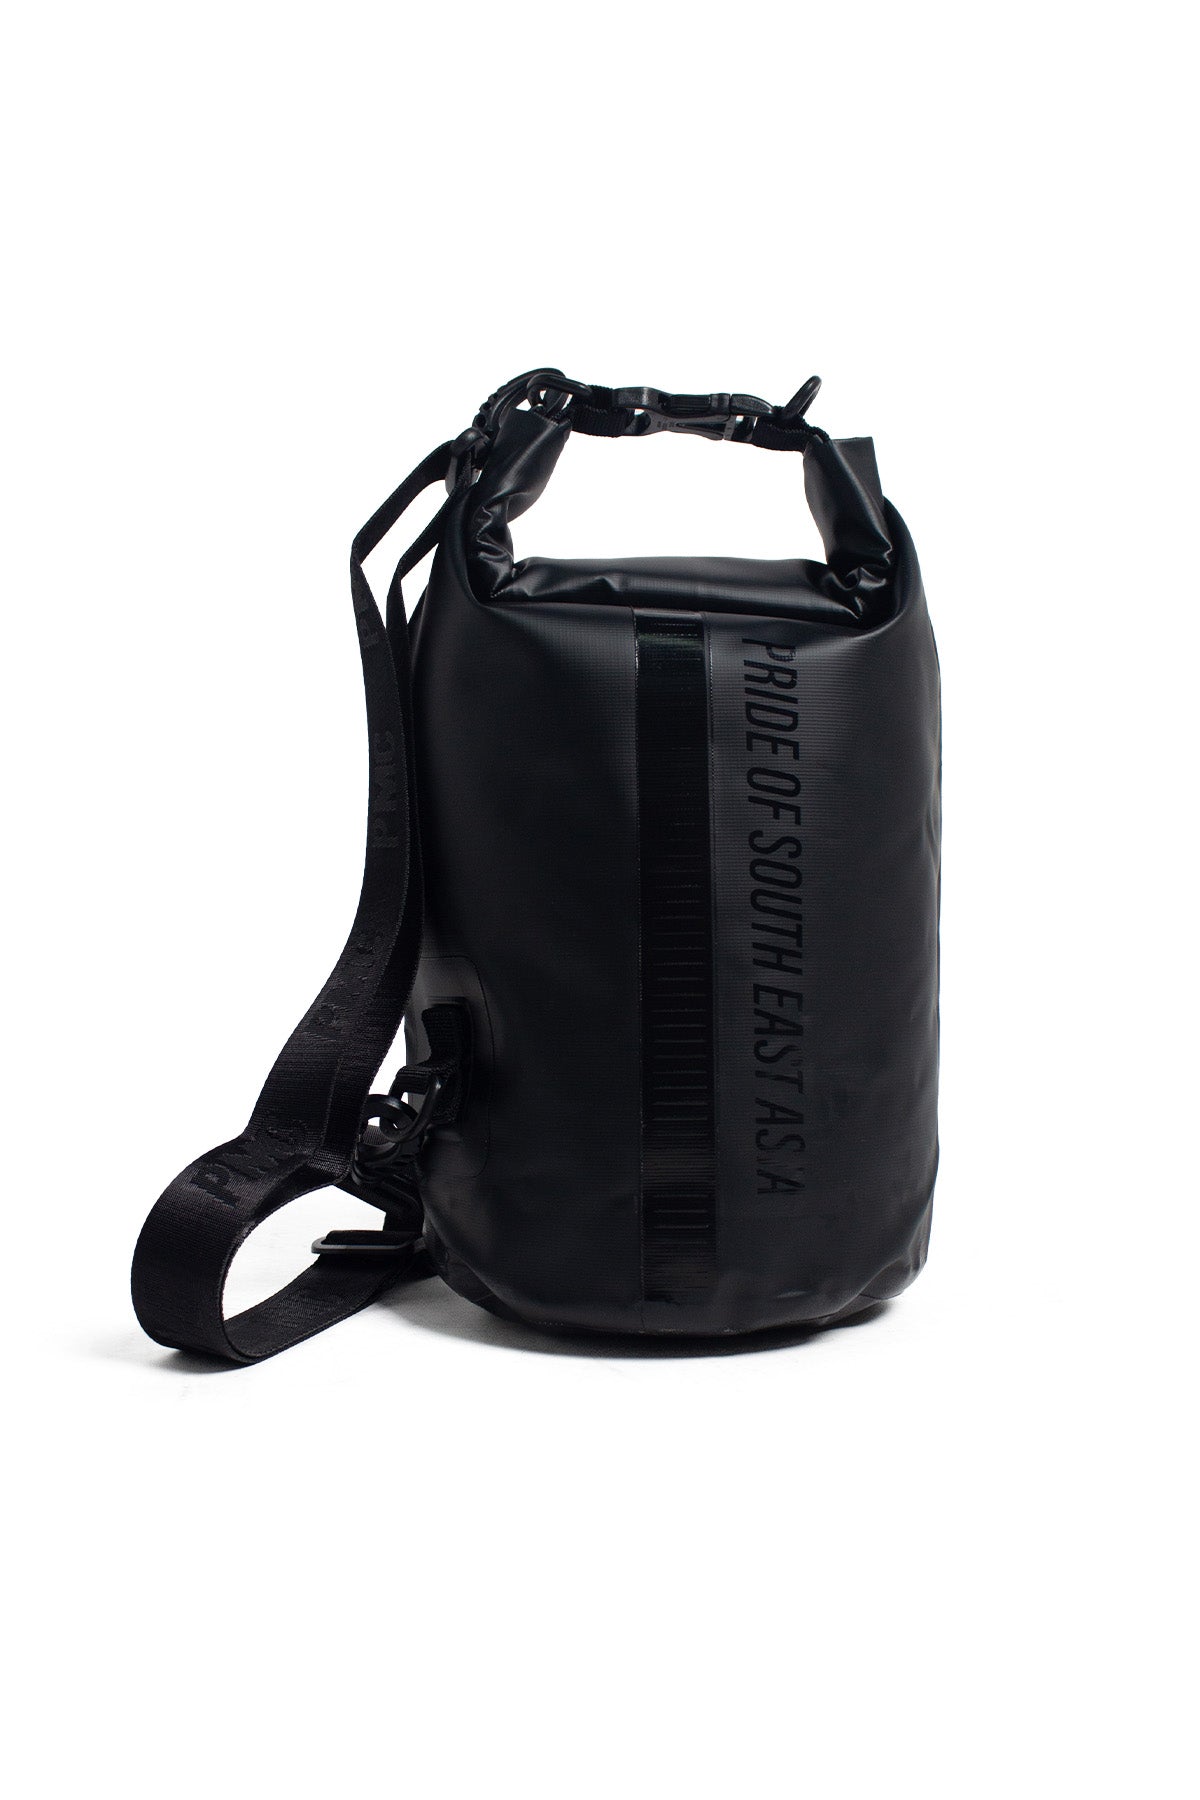 PMC x Hypergear 10L Dry Bag Black